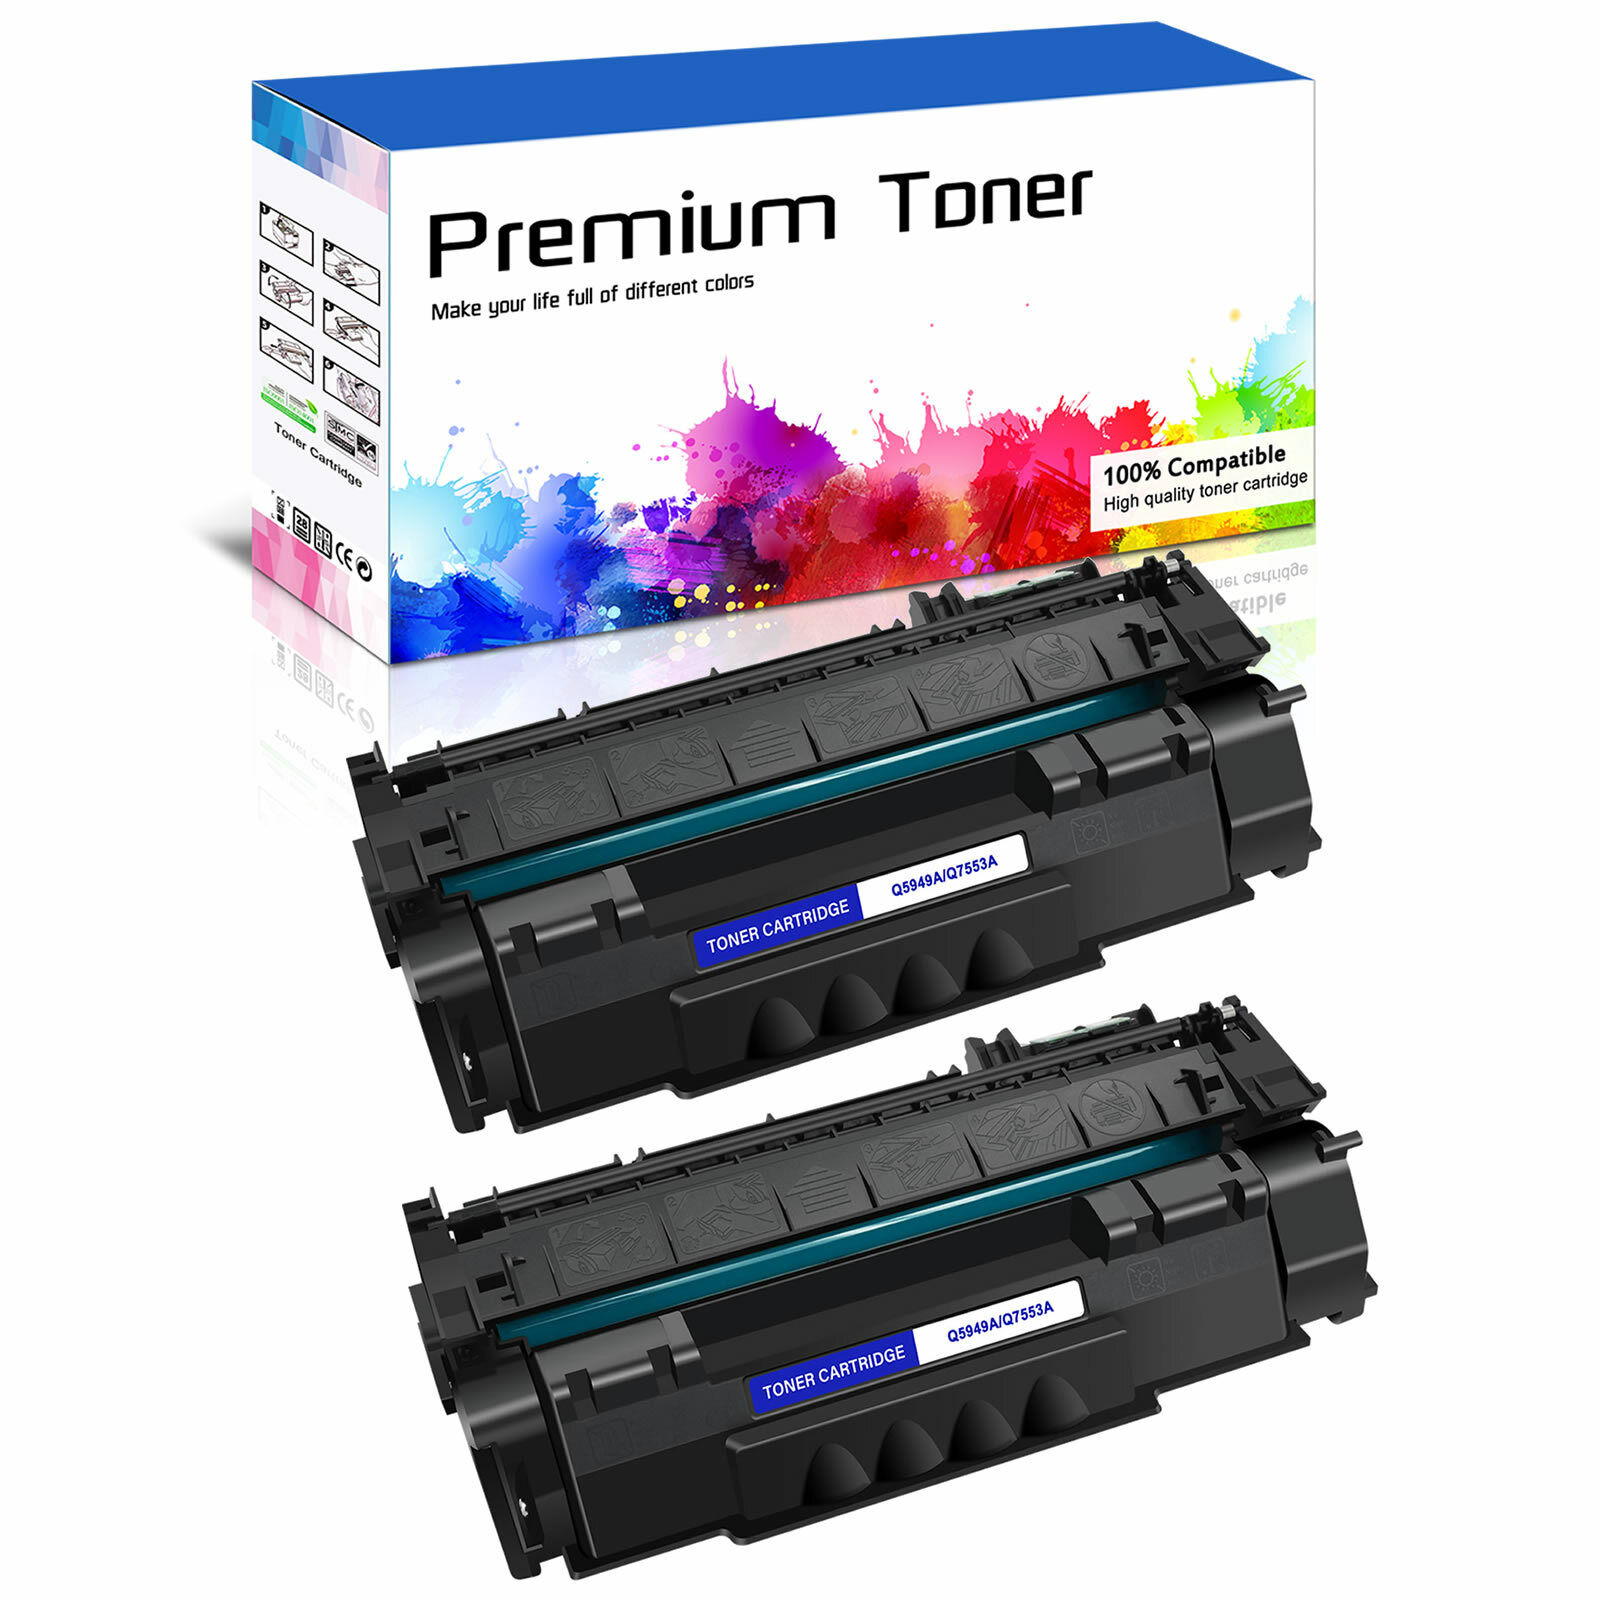 2PK Q7553A 53A Toner Cartridge For HP Laserjet P2015x P2015dn M2727nfs Printer